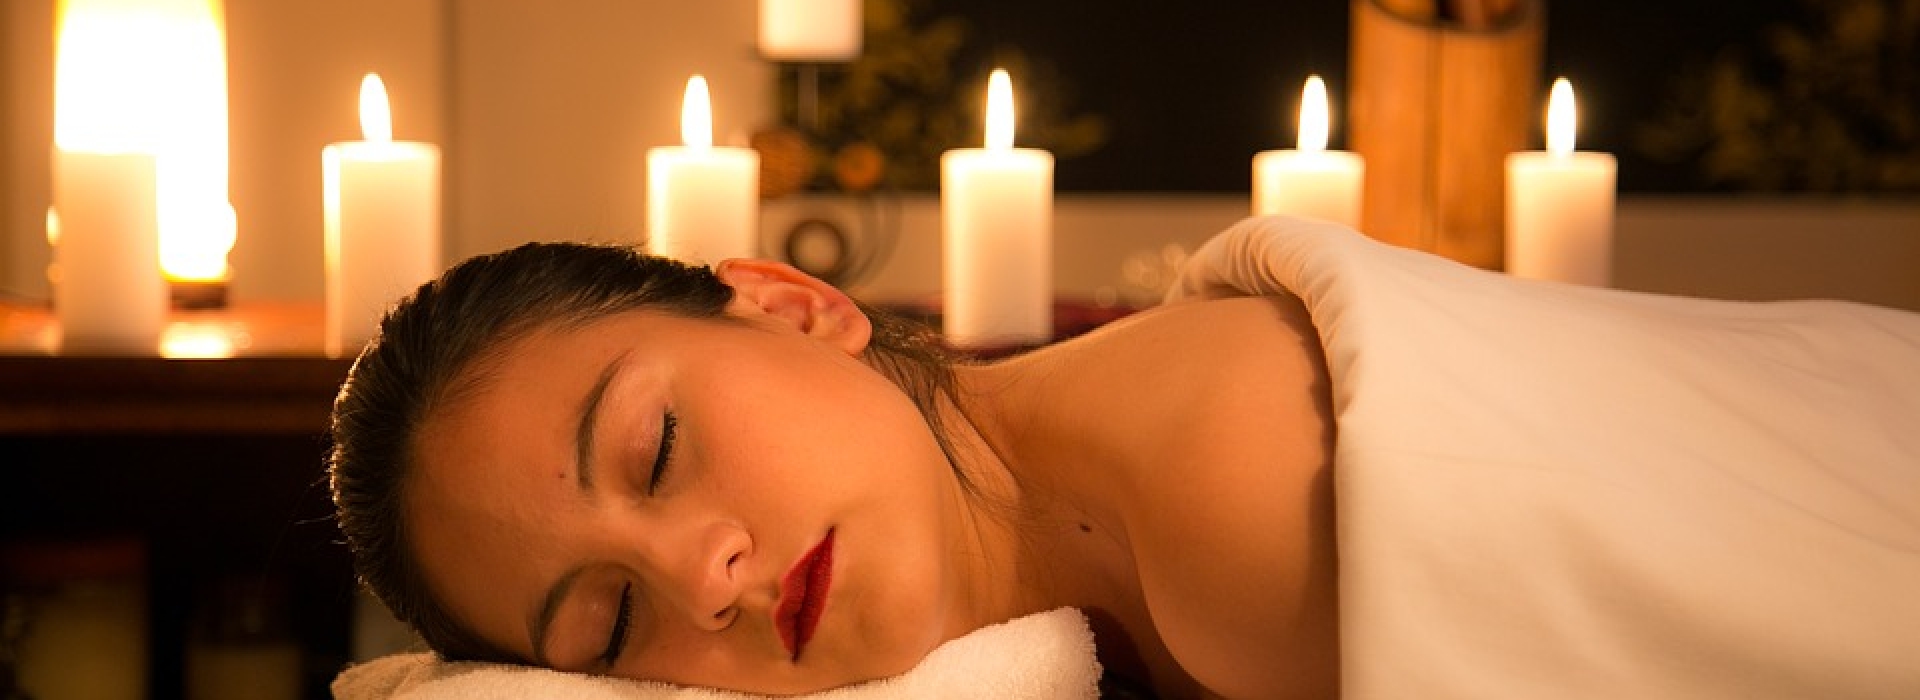 Uillean Massage Therapy Center Regenerate Refresh Renew